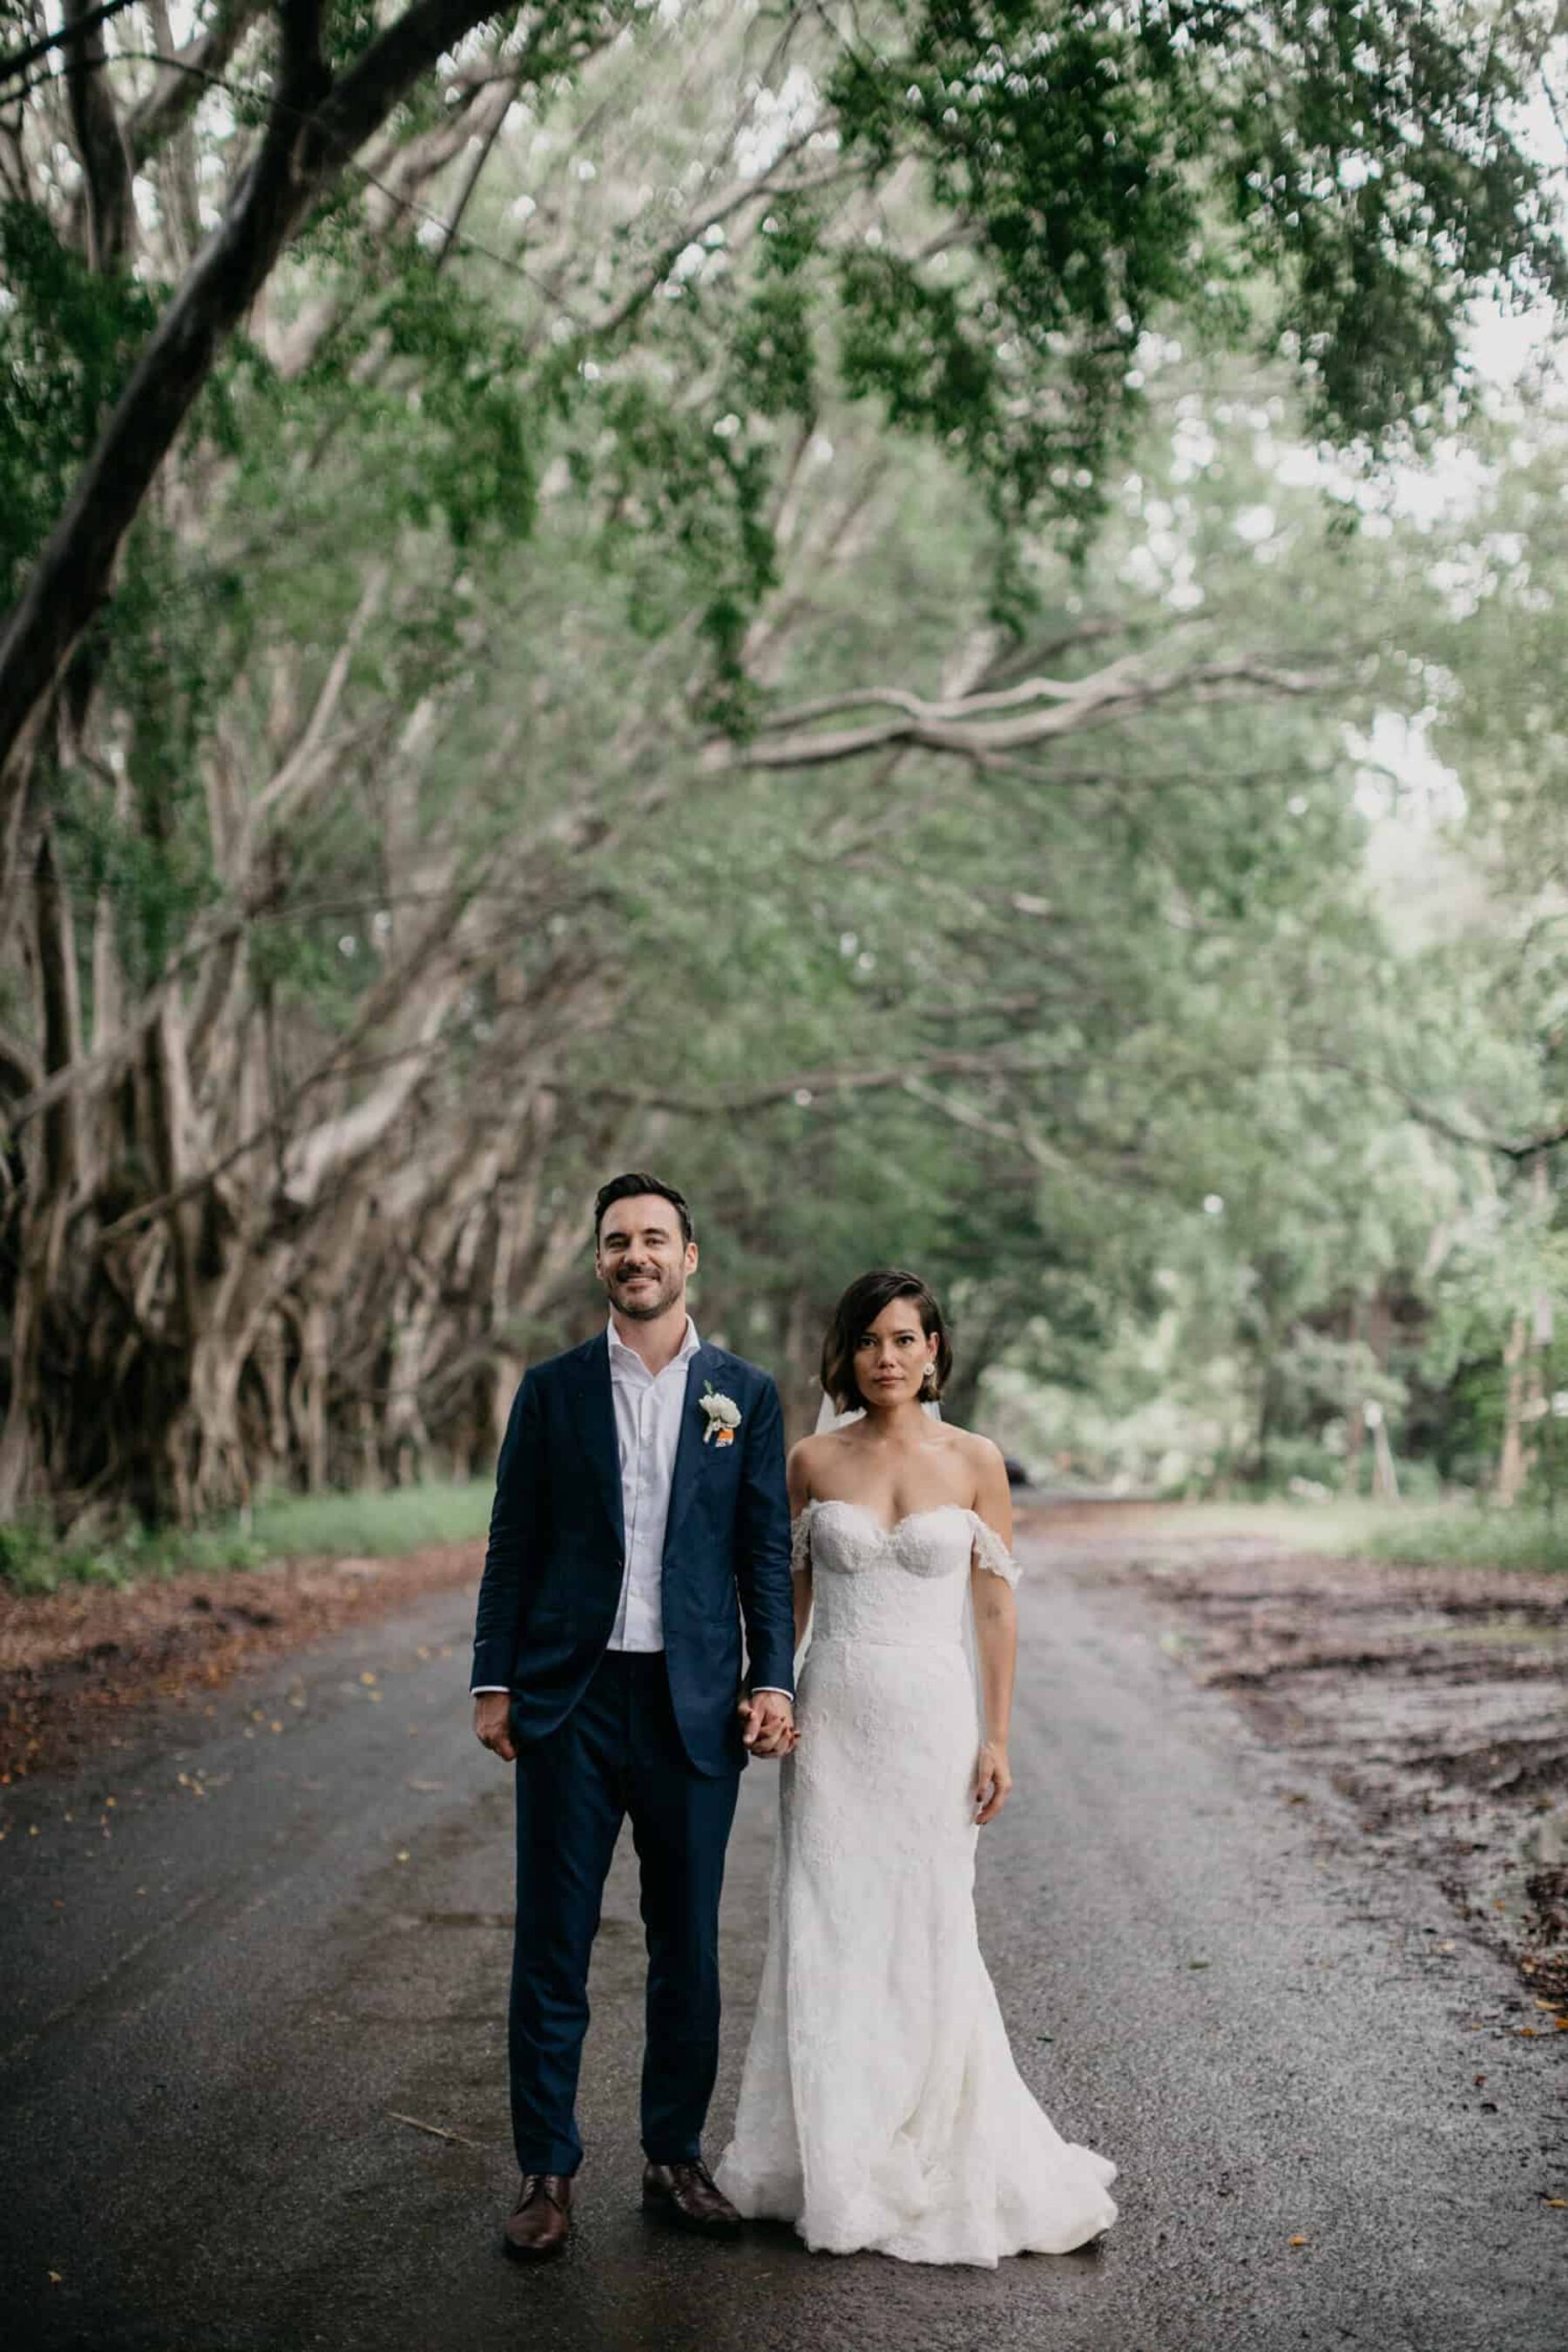 Byron Bay wedding - photography by Mitch Pohl